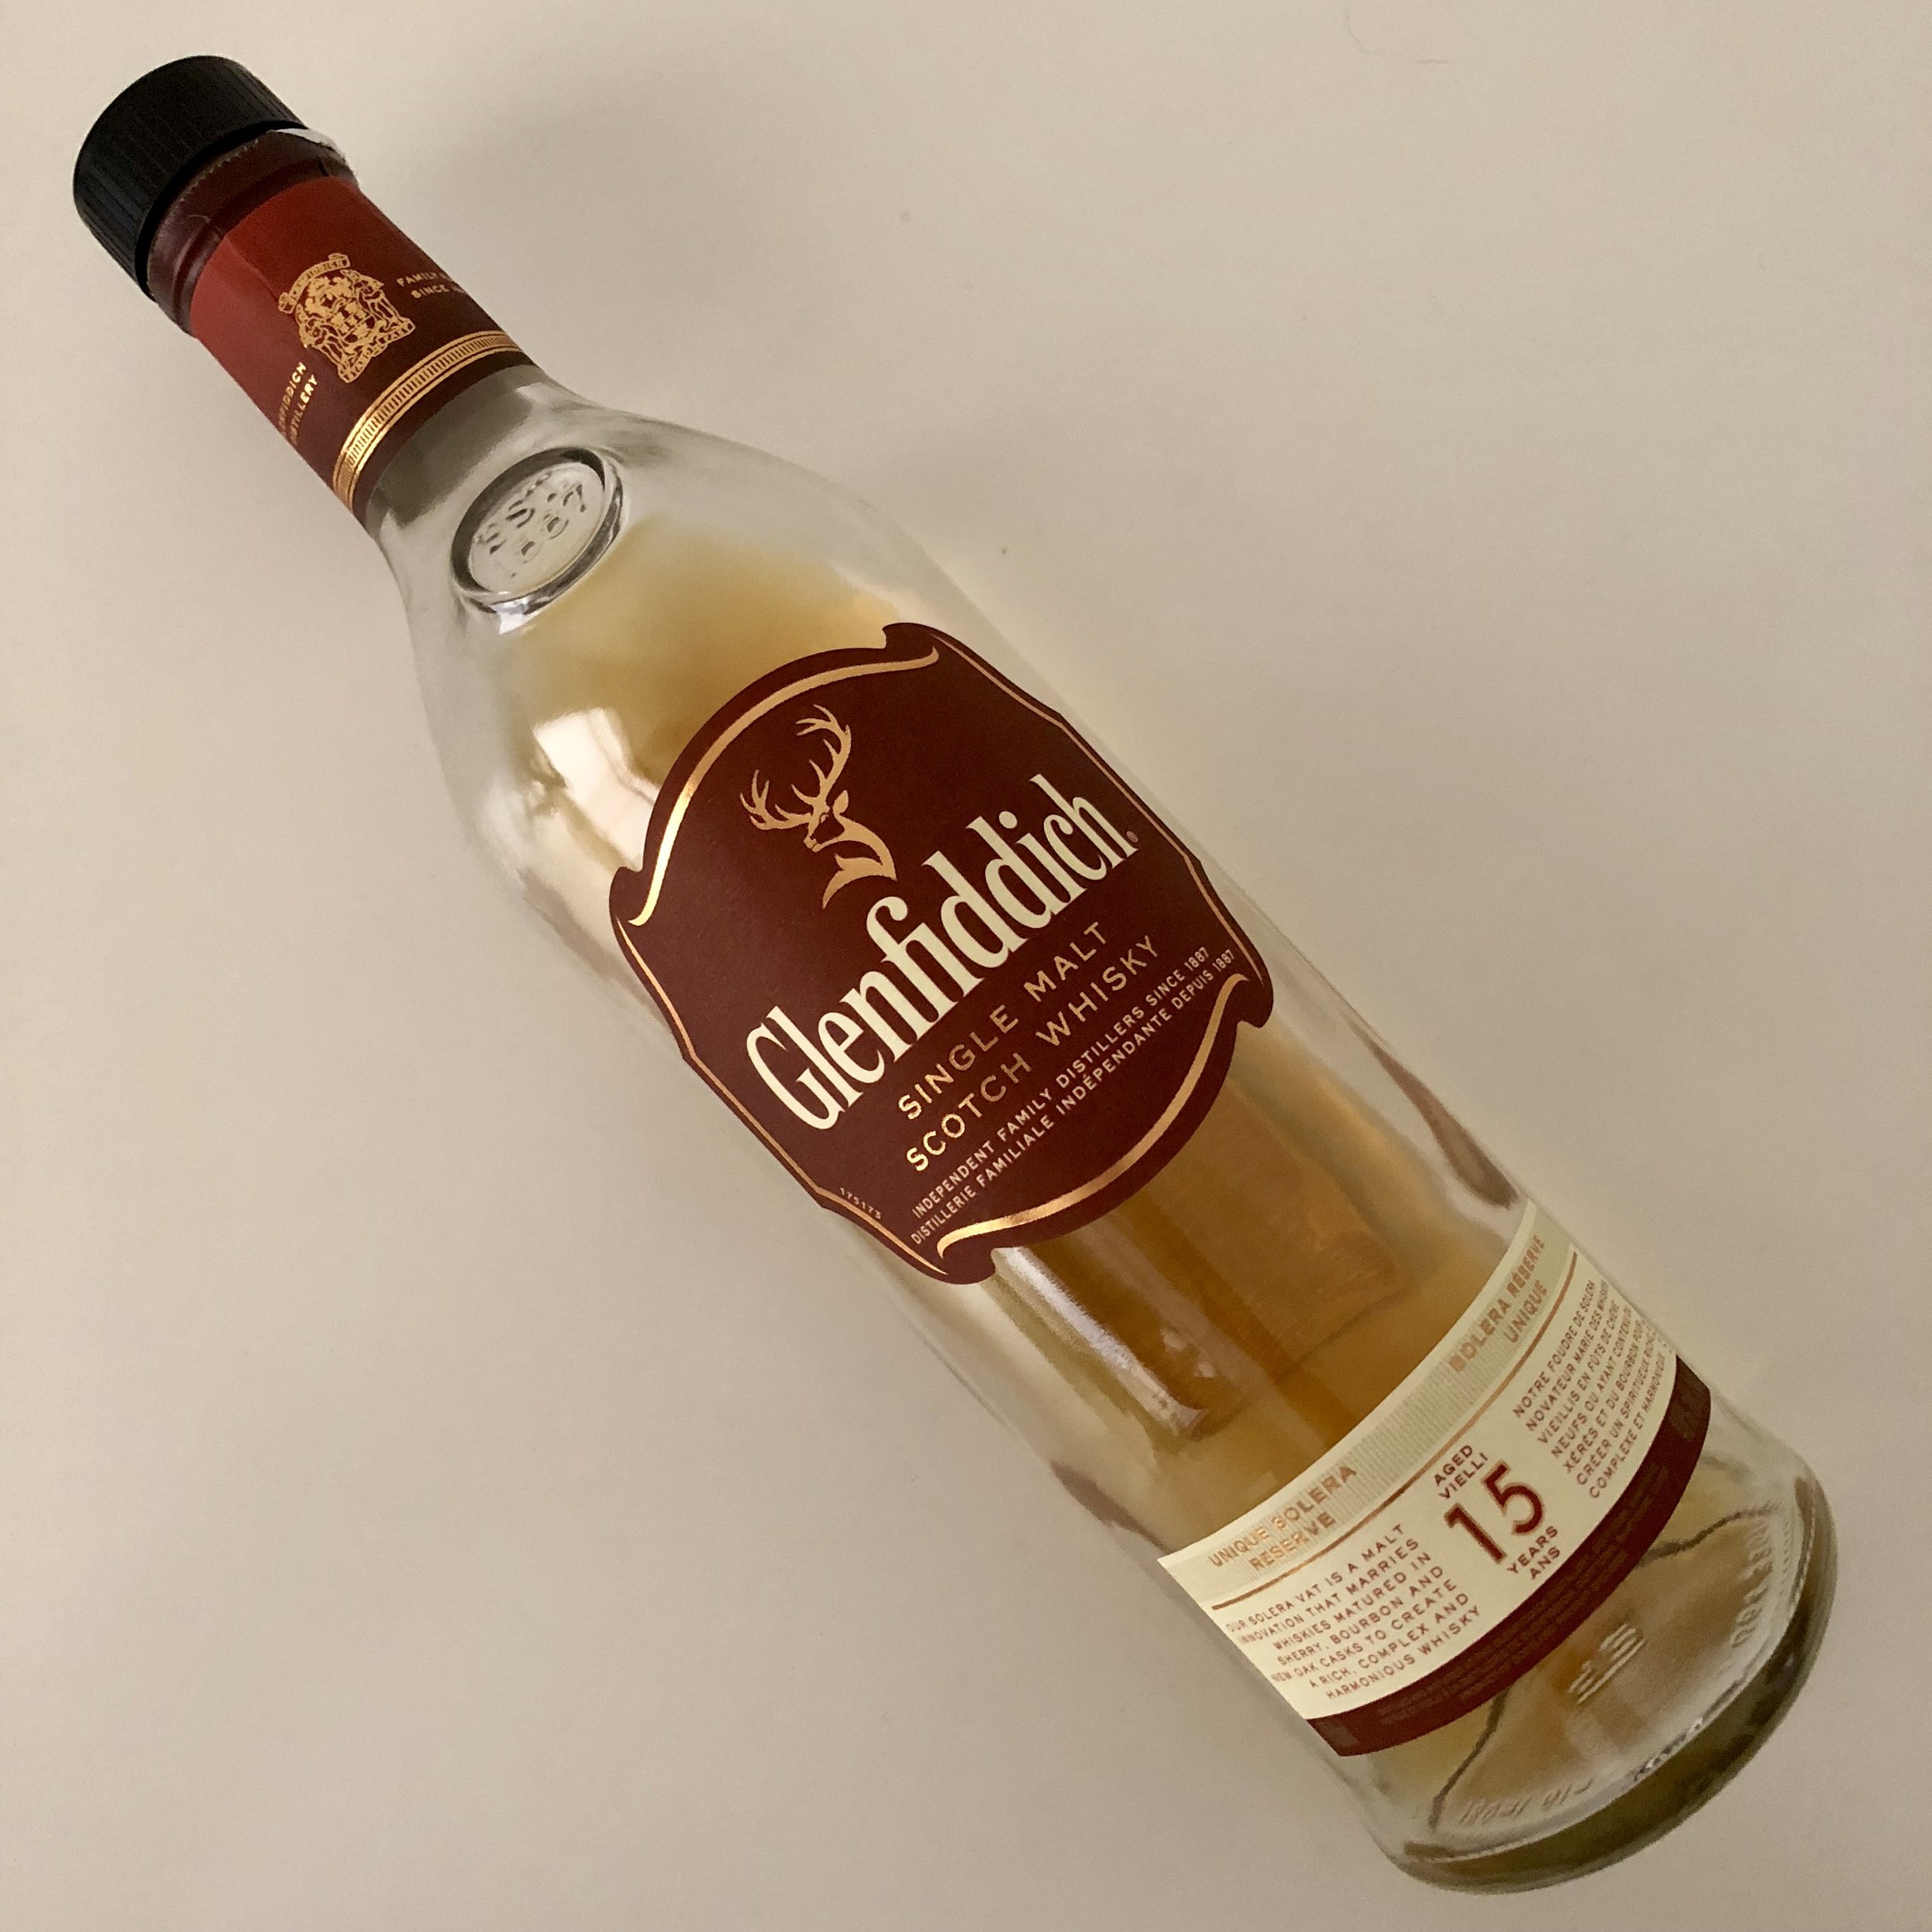 Glenfiddich 12 Year Old Single Malt Scotch Whisky Review